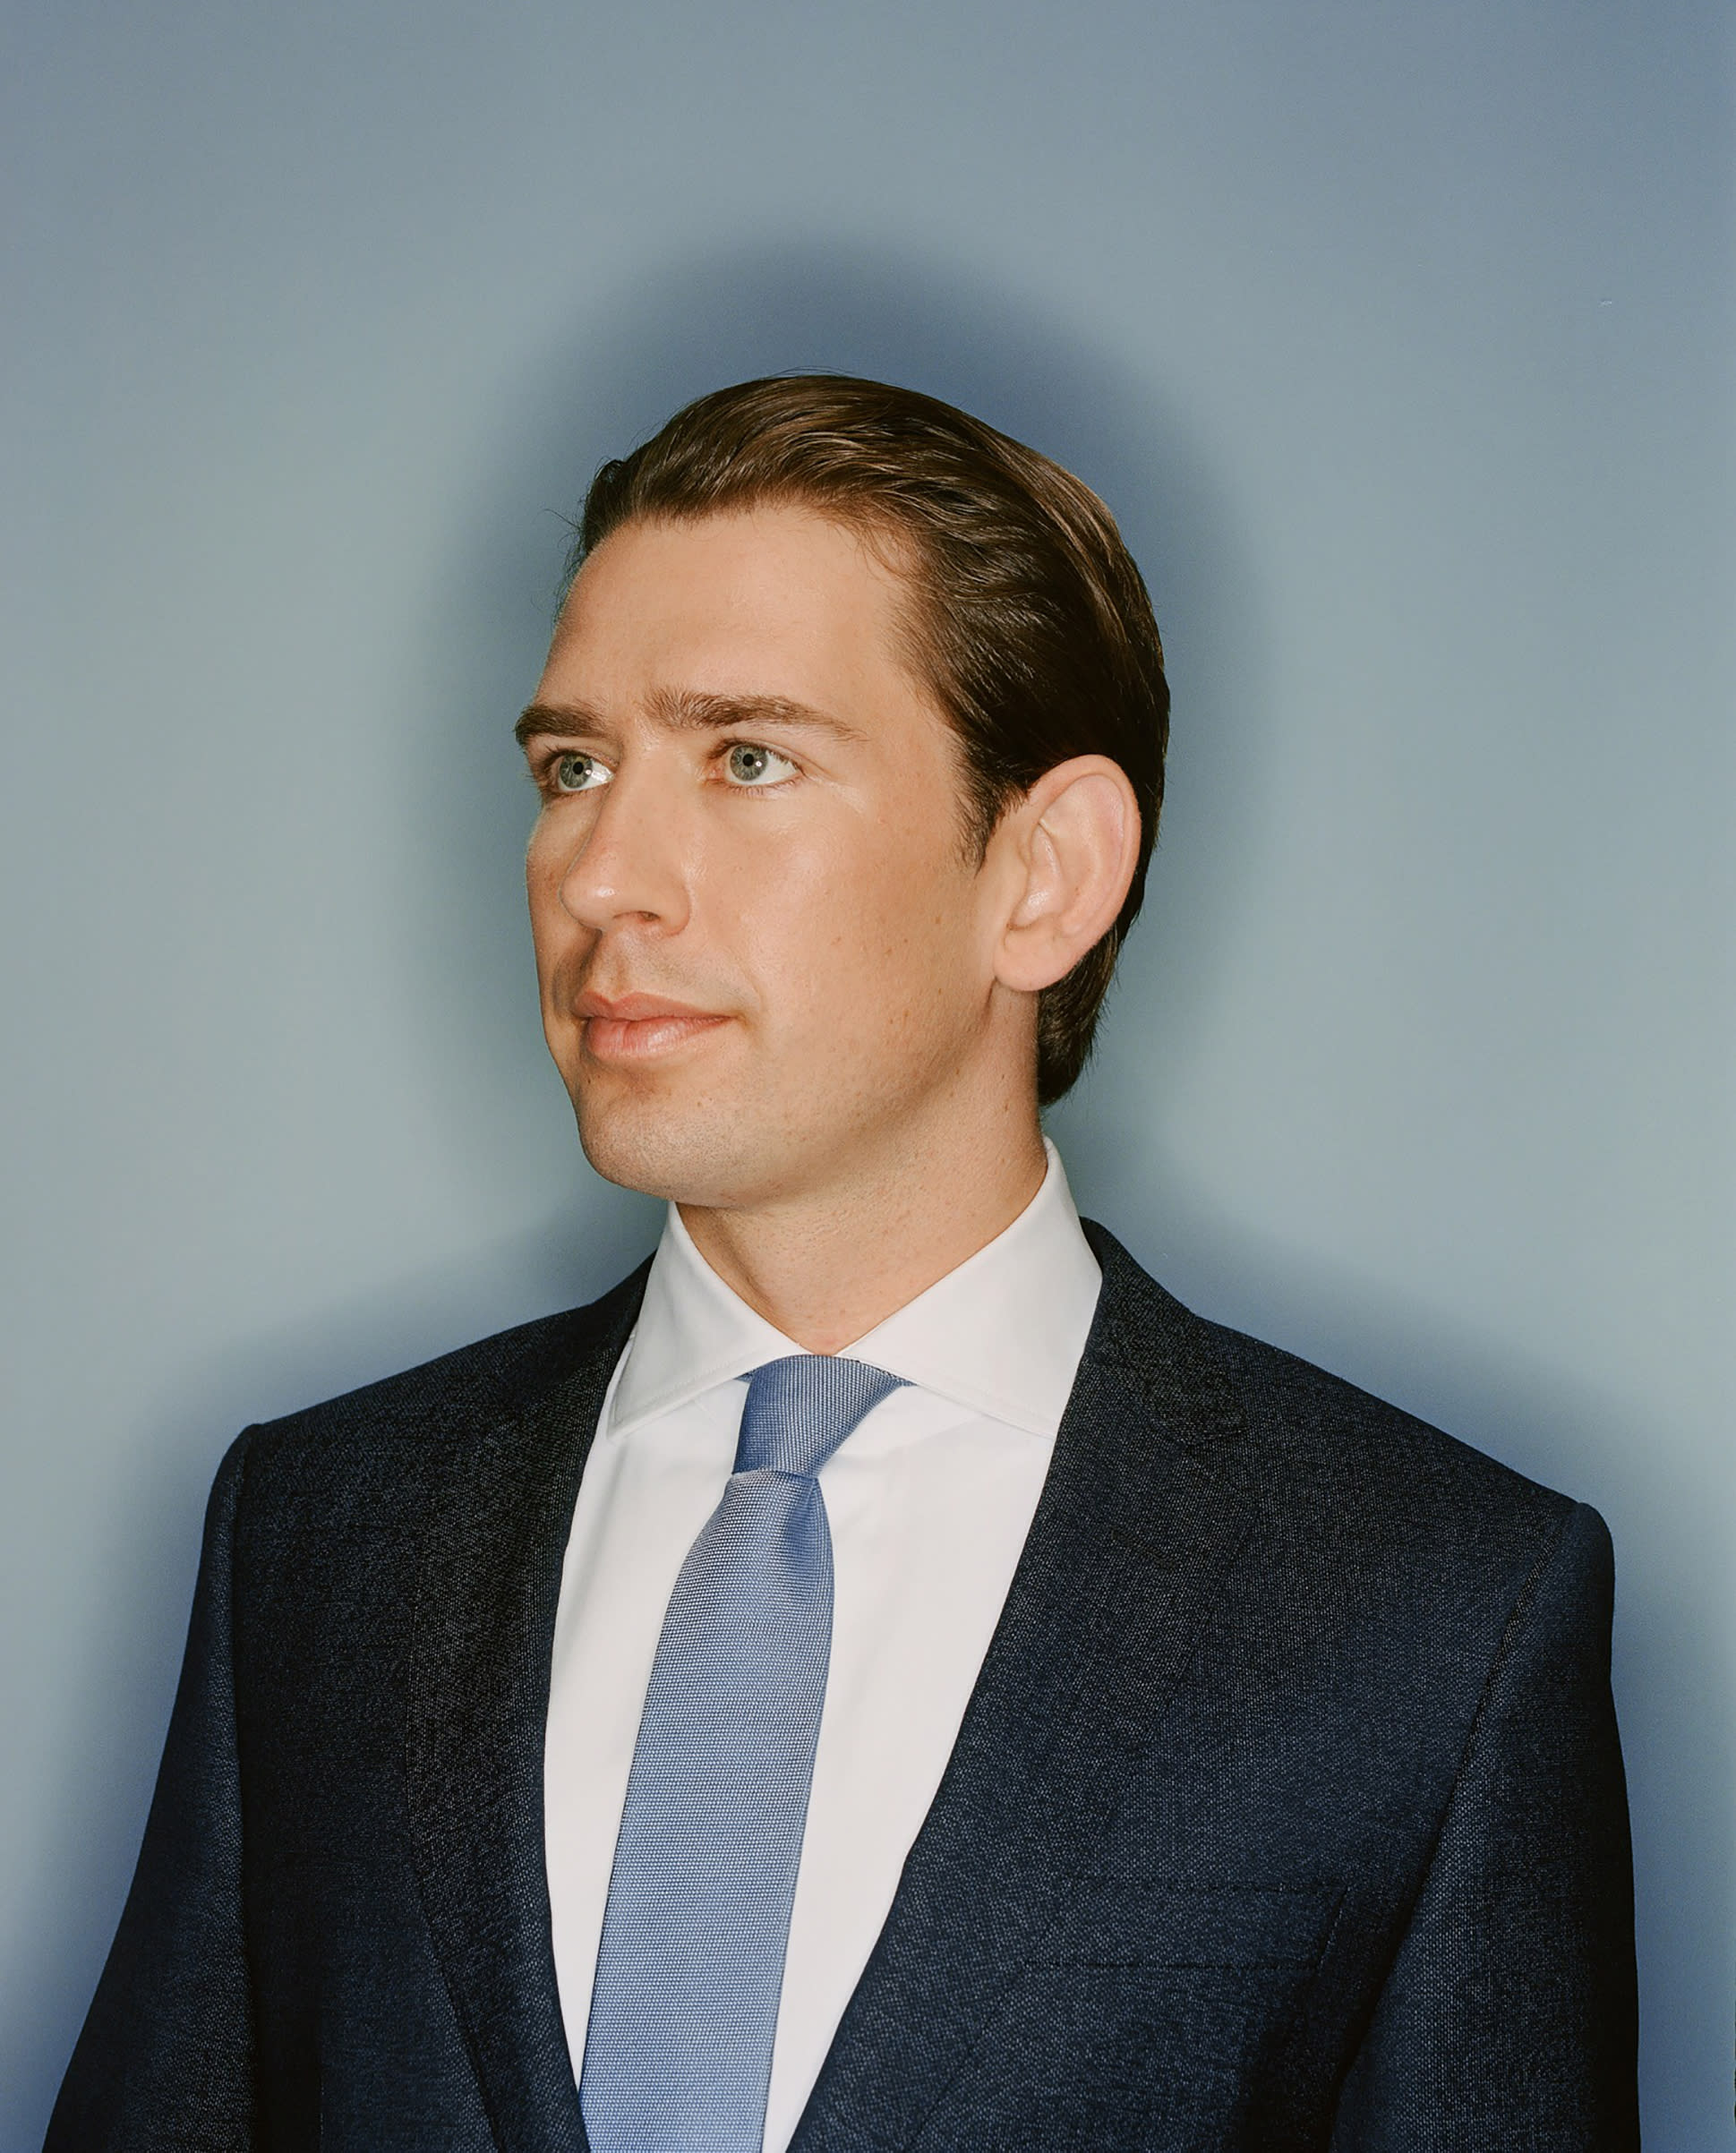 Austria's Young Chancellor Sebastian Kurz Is Bringing the ...